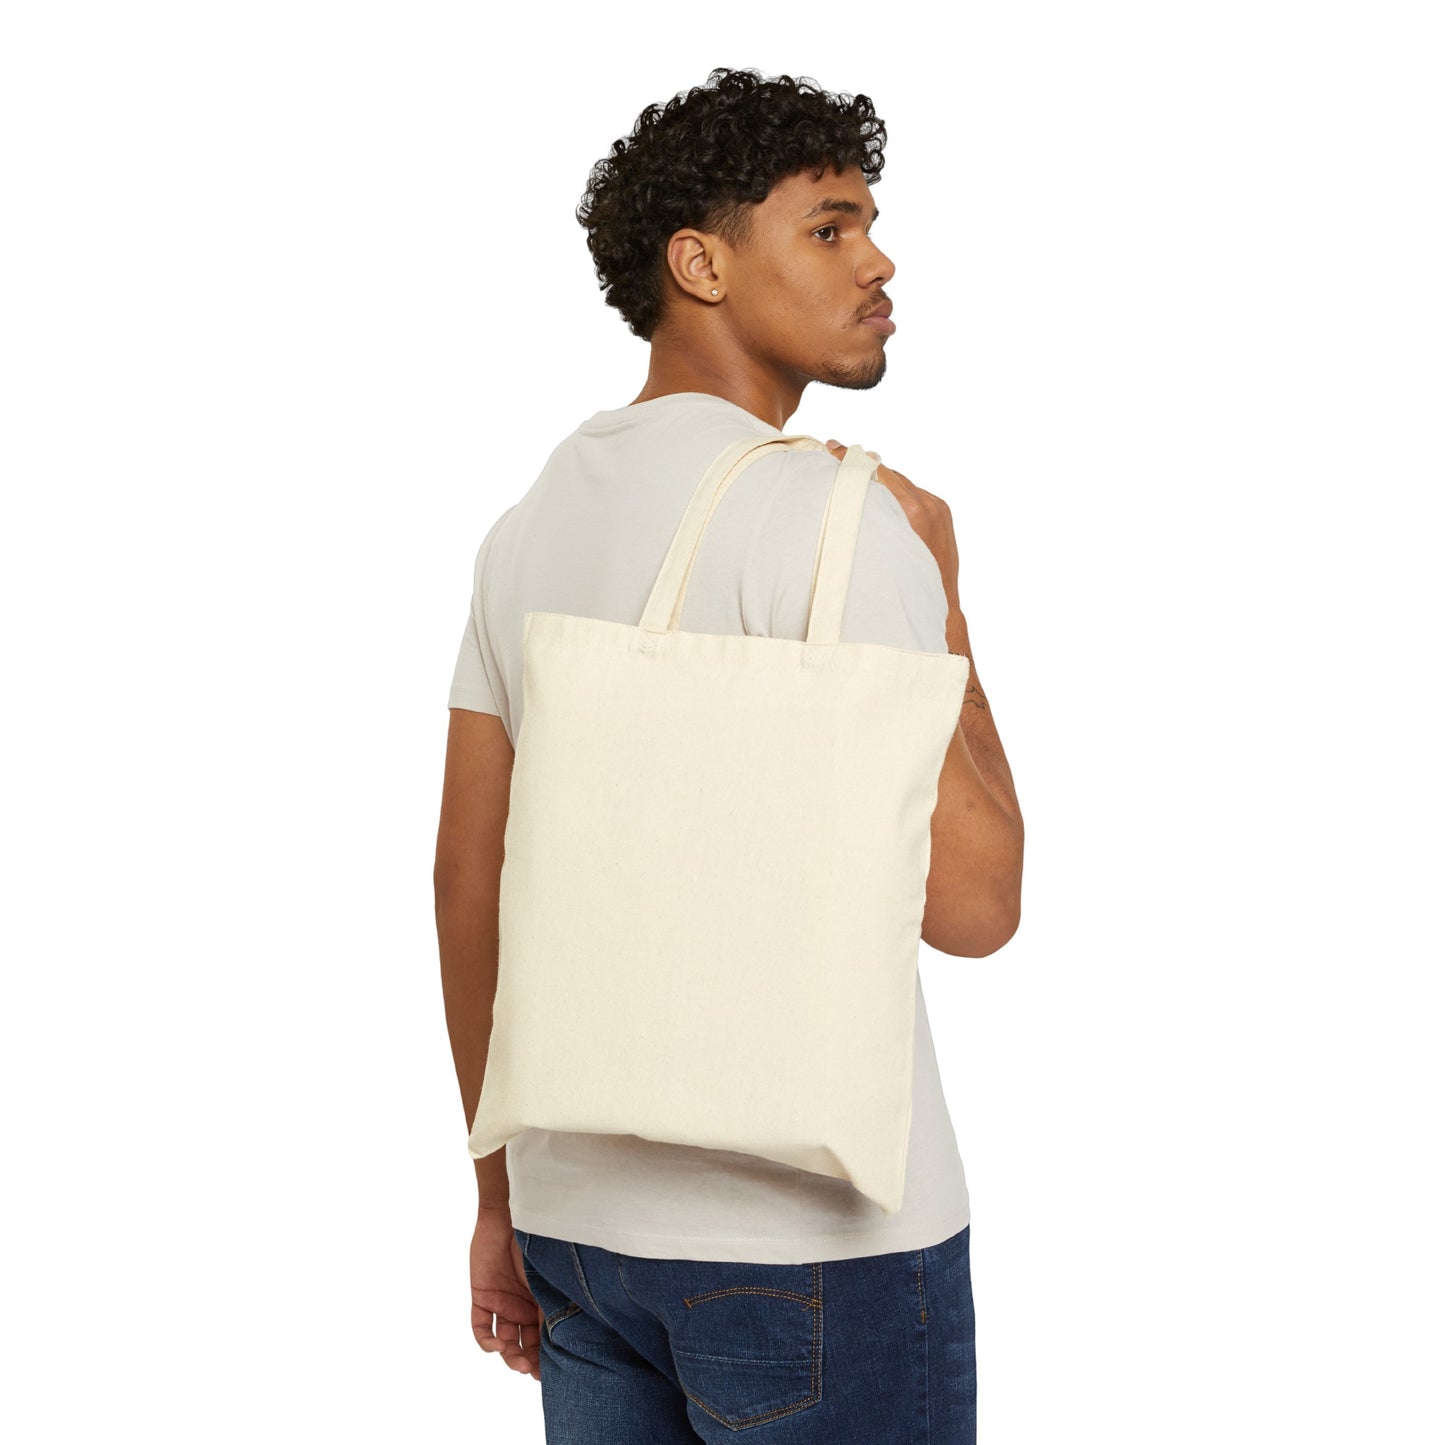 Tote Bag - Japanese Design